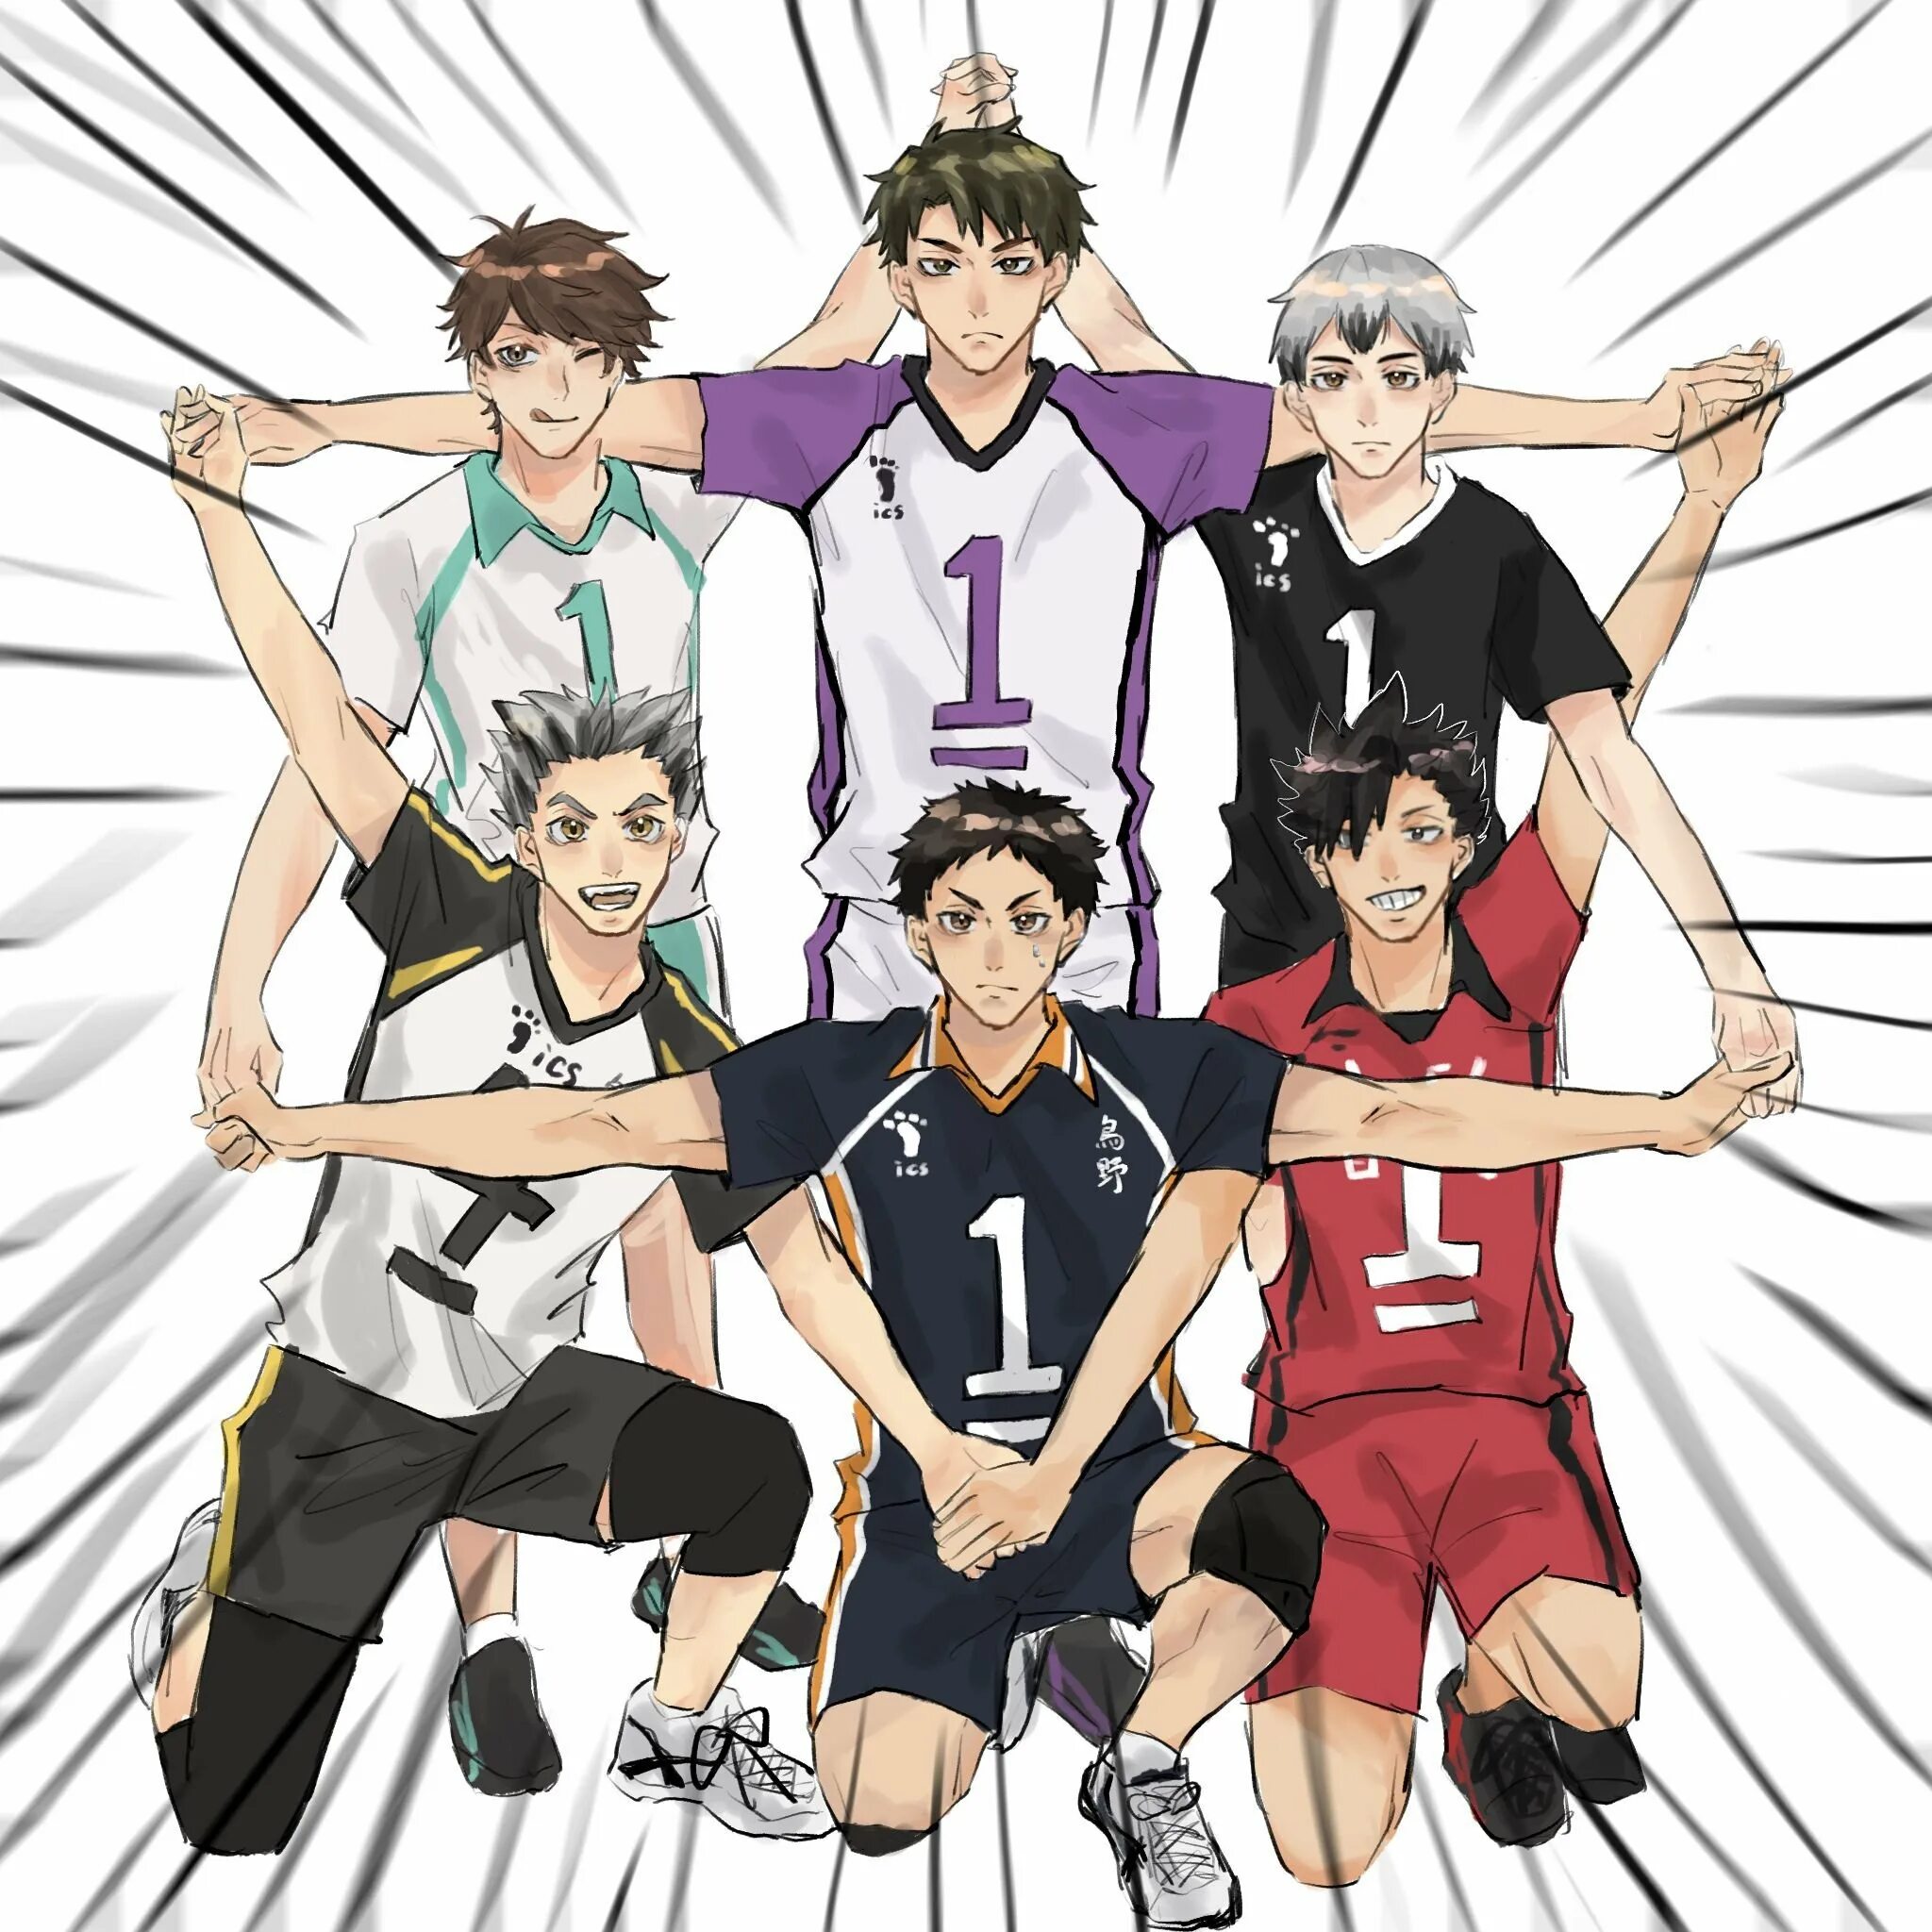 Персонажи волейбола. Команда Карасуно персонажи. Аниме волейбол команда Шираторидзава. Волейбол аниме персонажи Карасуно. Волейбол персонажи Карасуно.